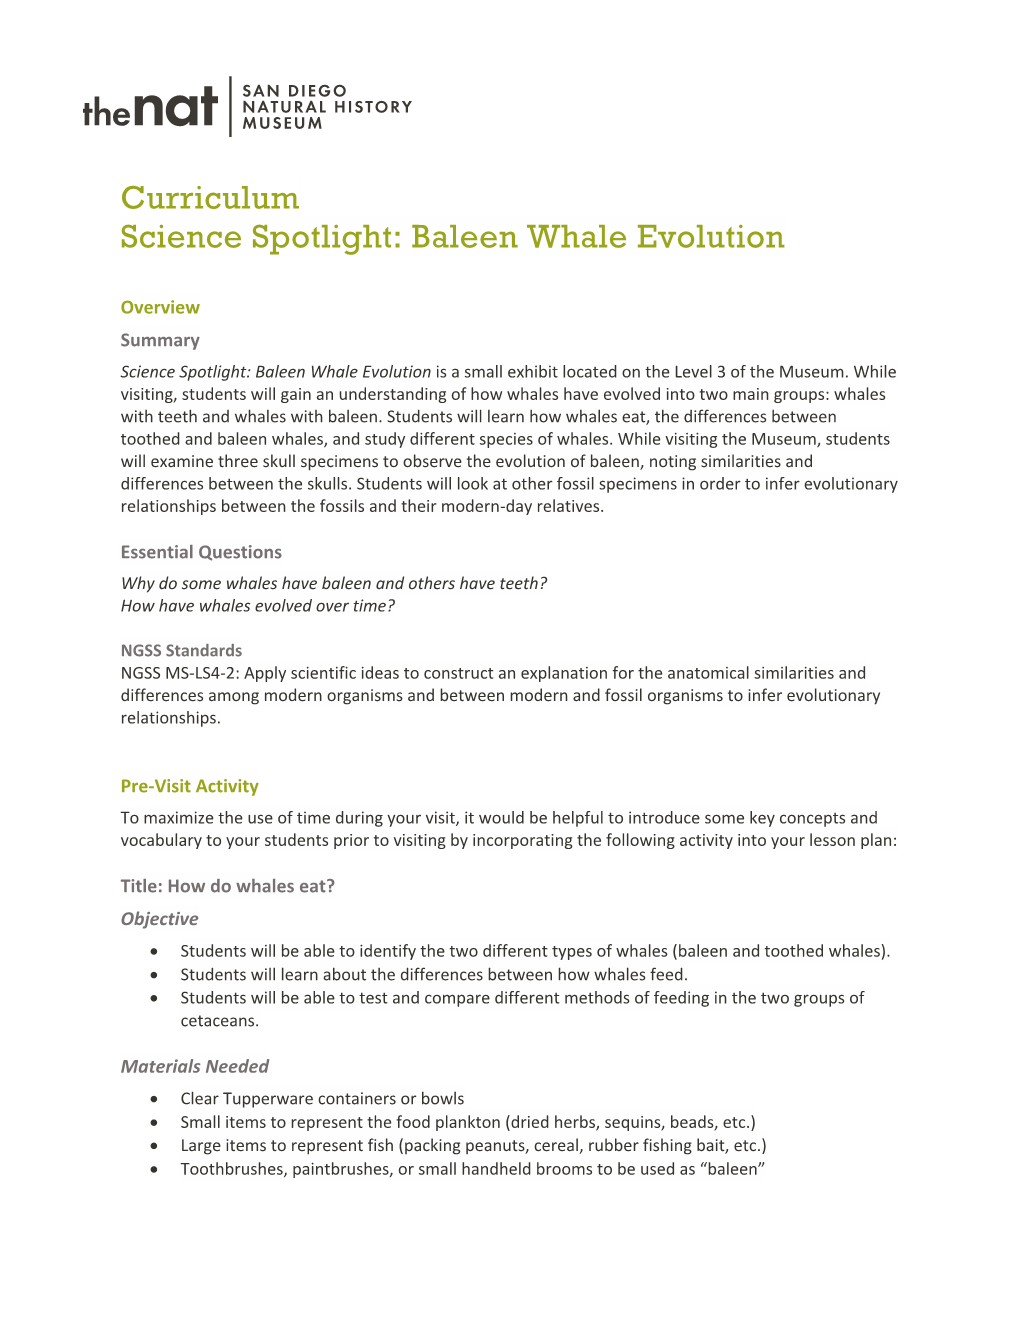 Science Spotlight Baleen Whale Evolution Curriculum